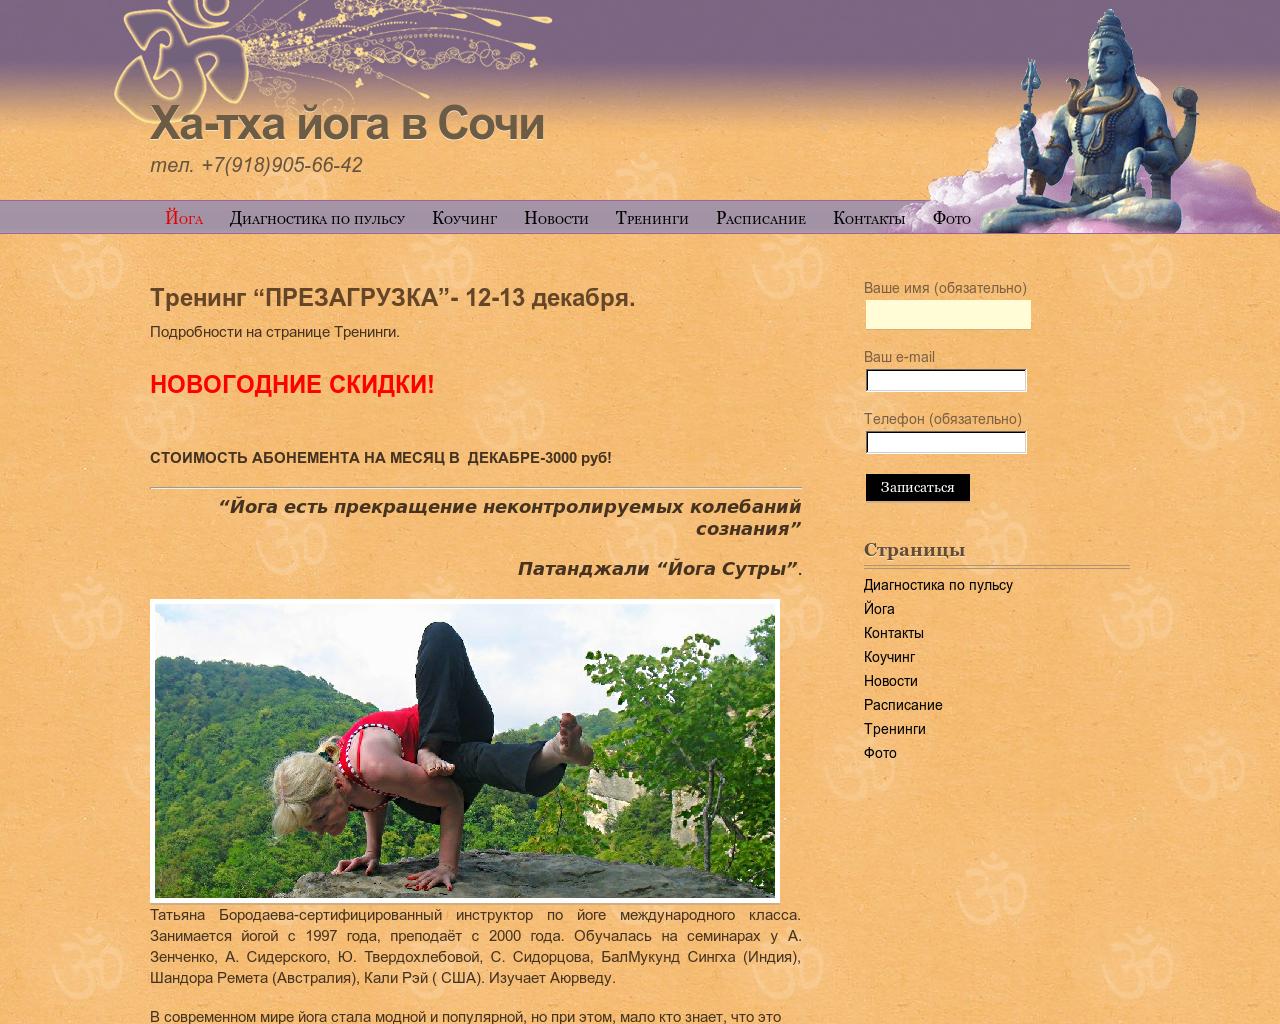 Изображение сайта sochiyoga.ru в разрешении 1280x1024